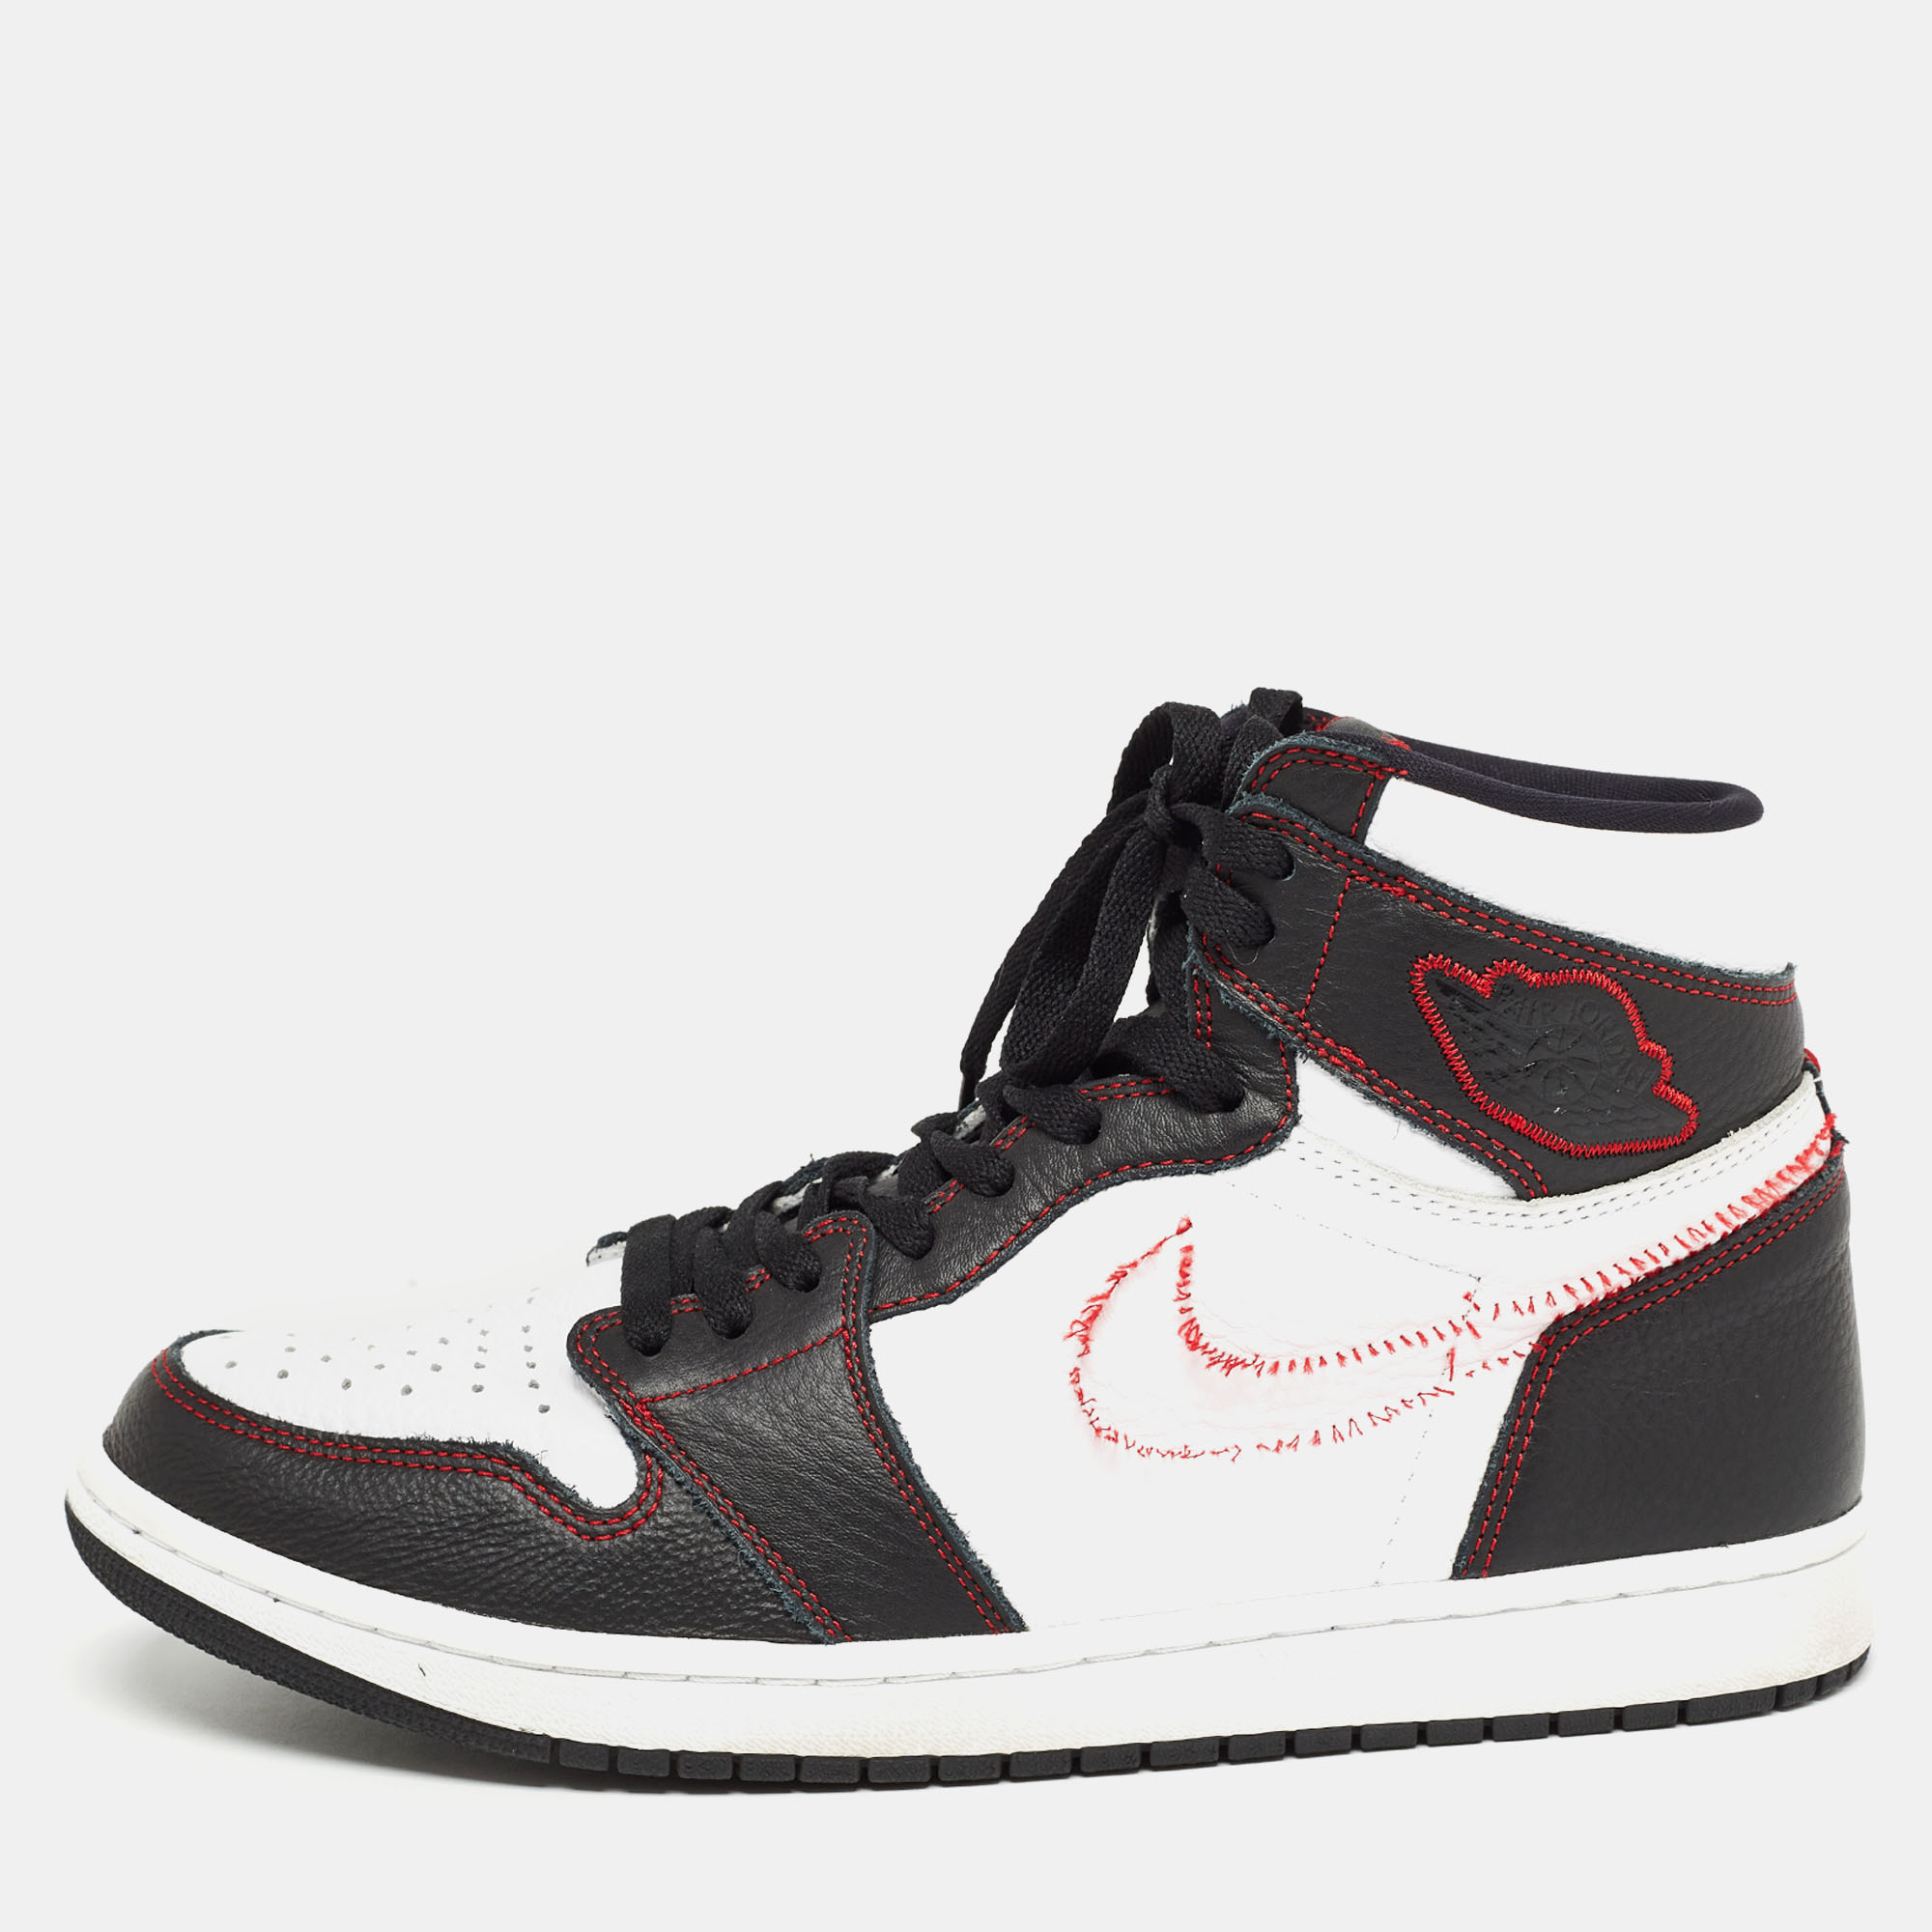 

Air Jordans Multicolor Leather Jordan 1 Retro High Defiant White Black Gym Red Sneakers Size